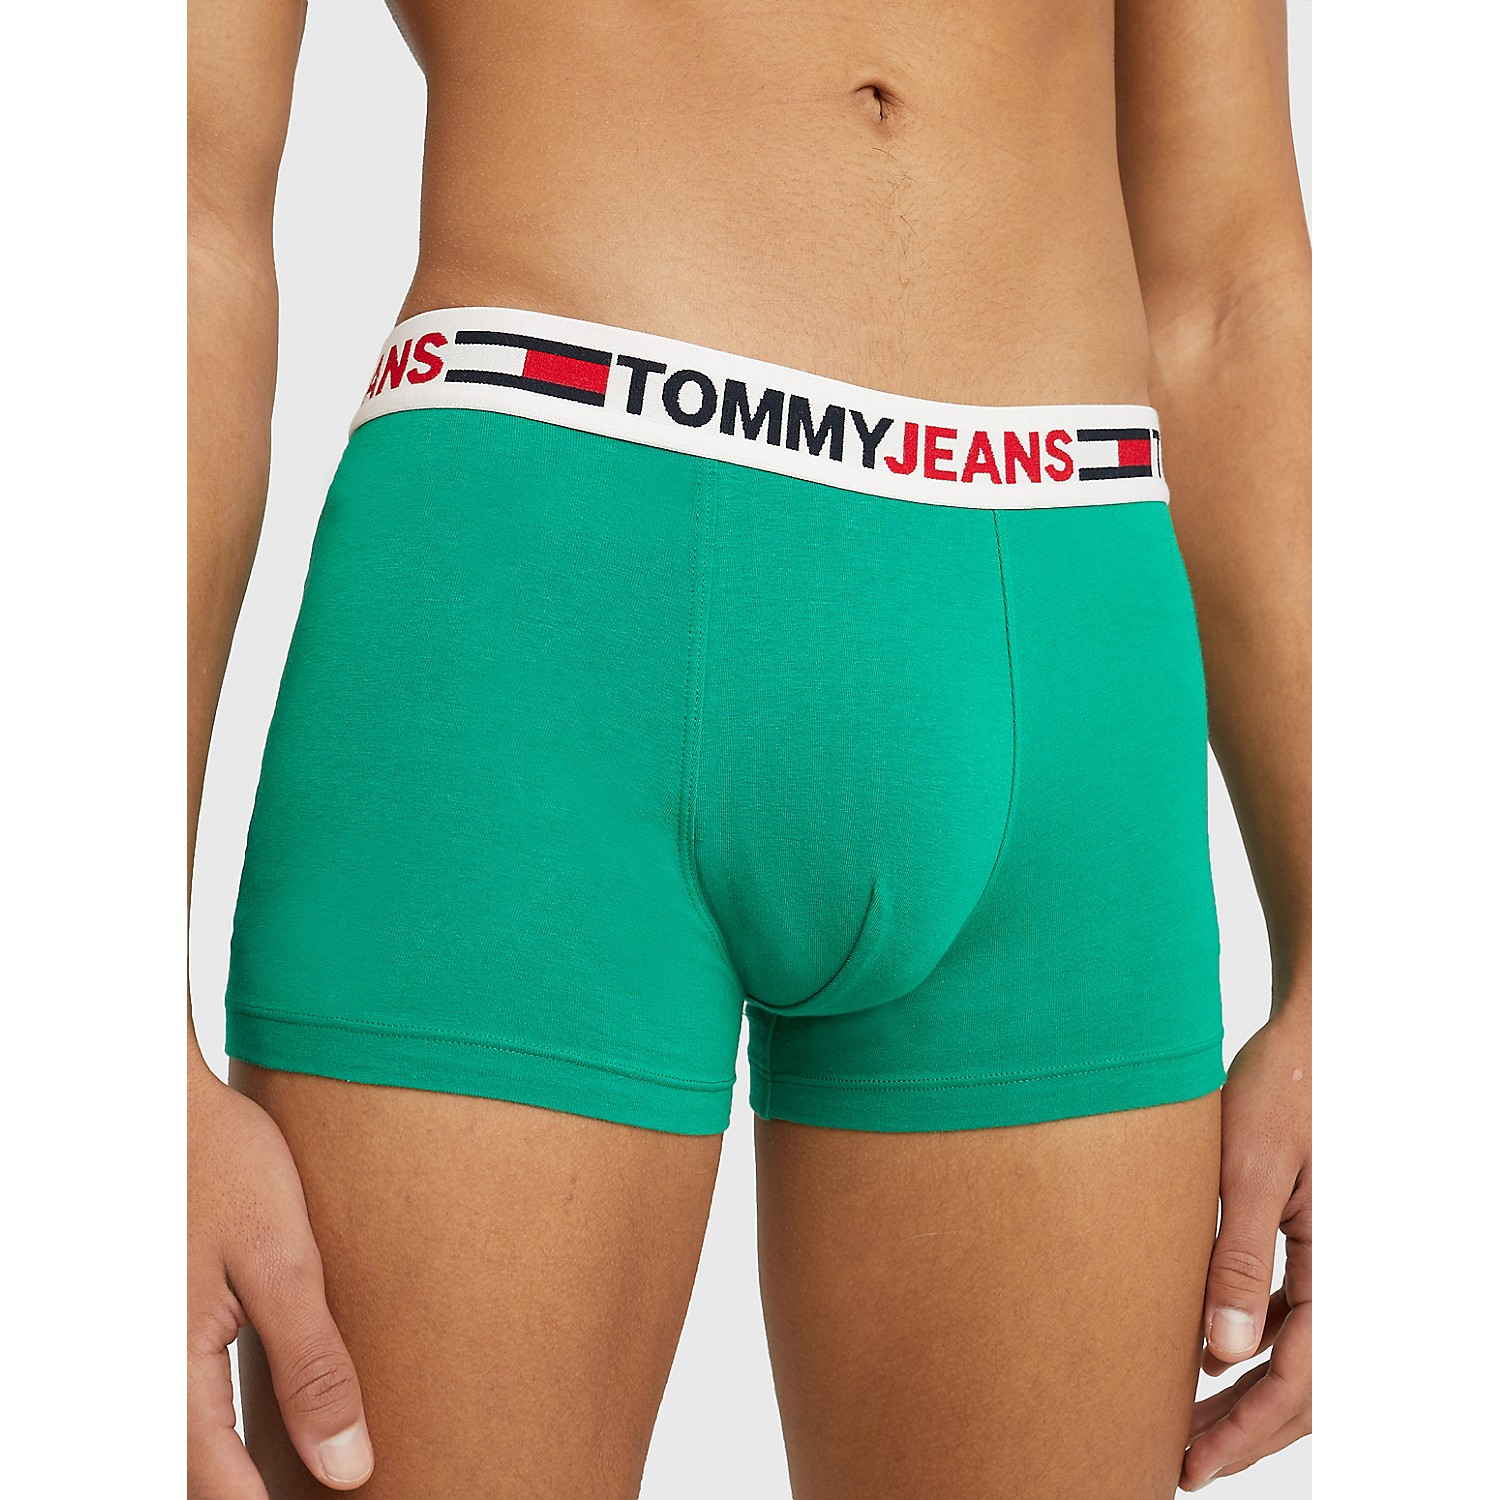 TOMMY HILFIGER Tommy Jeans Trunk